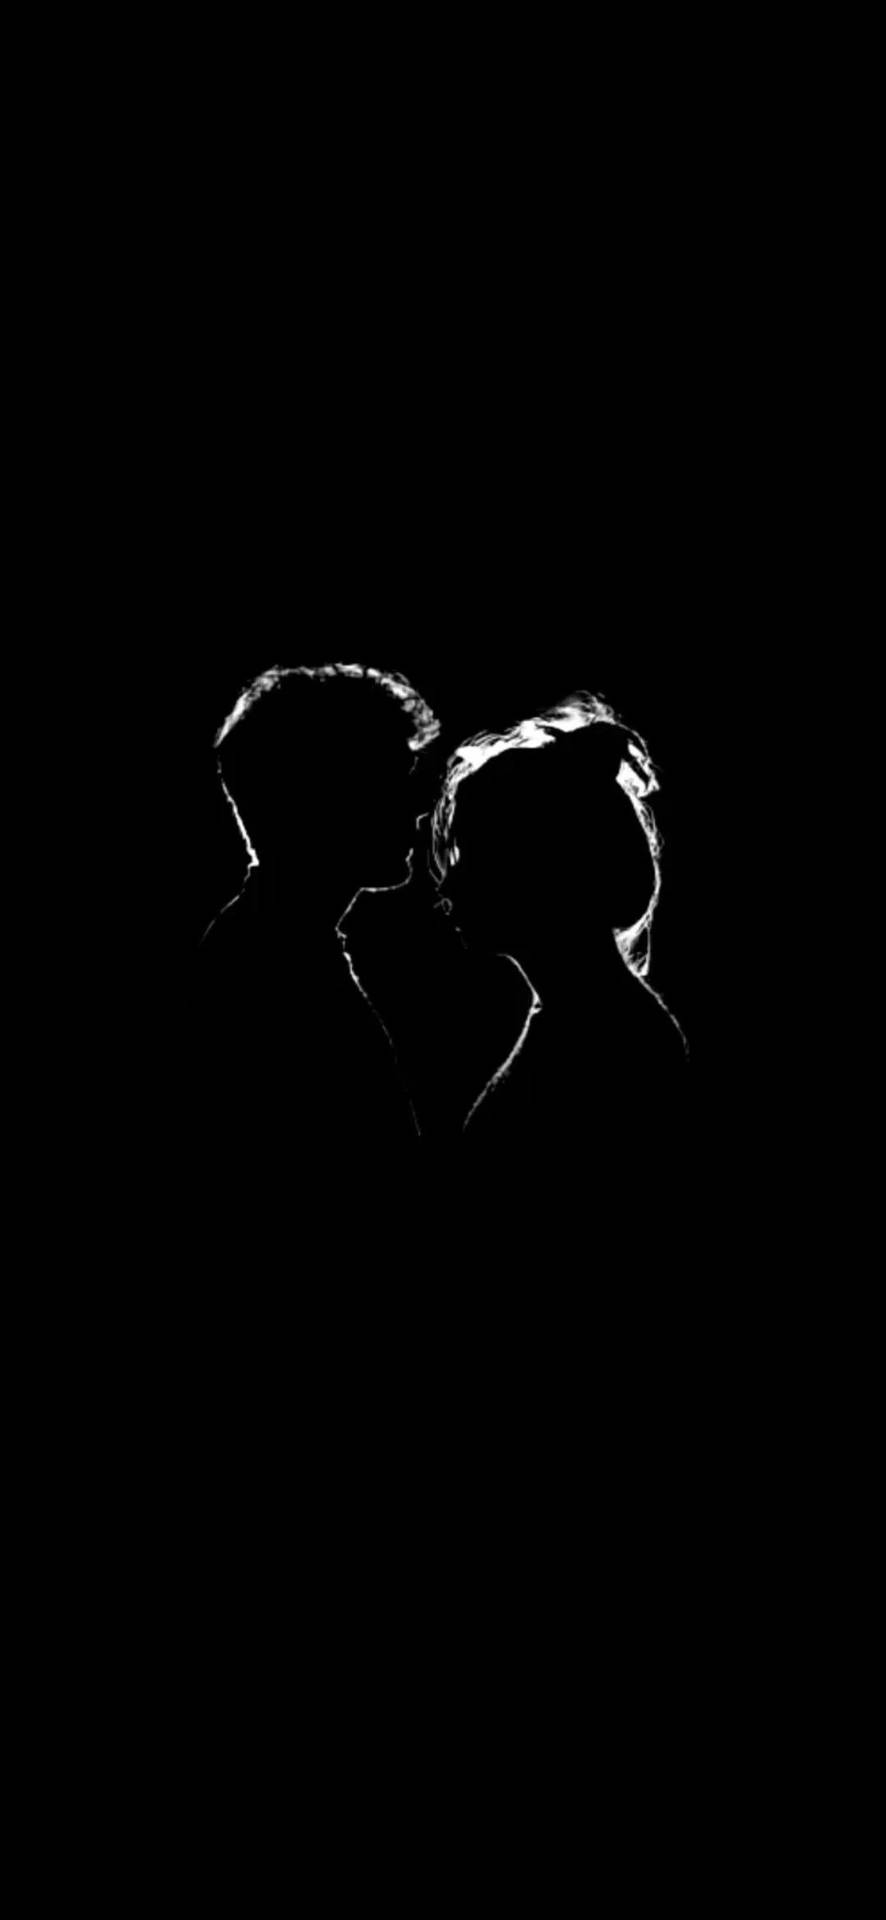 Download Love Black And White Couple Silhouette Wallpaper 